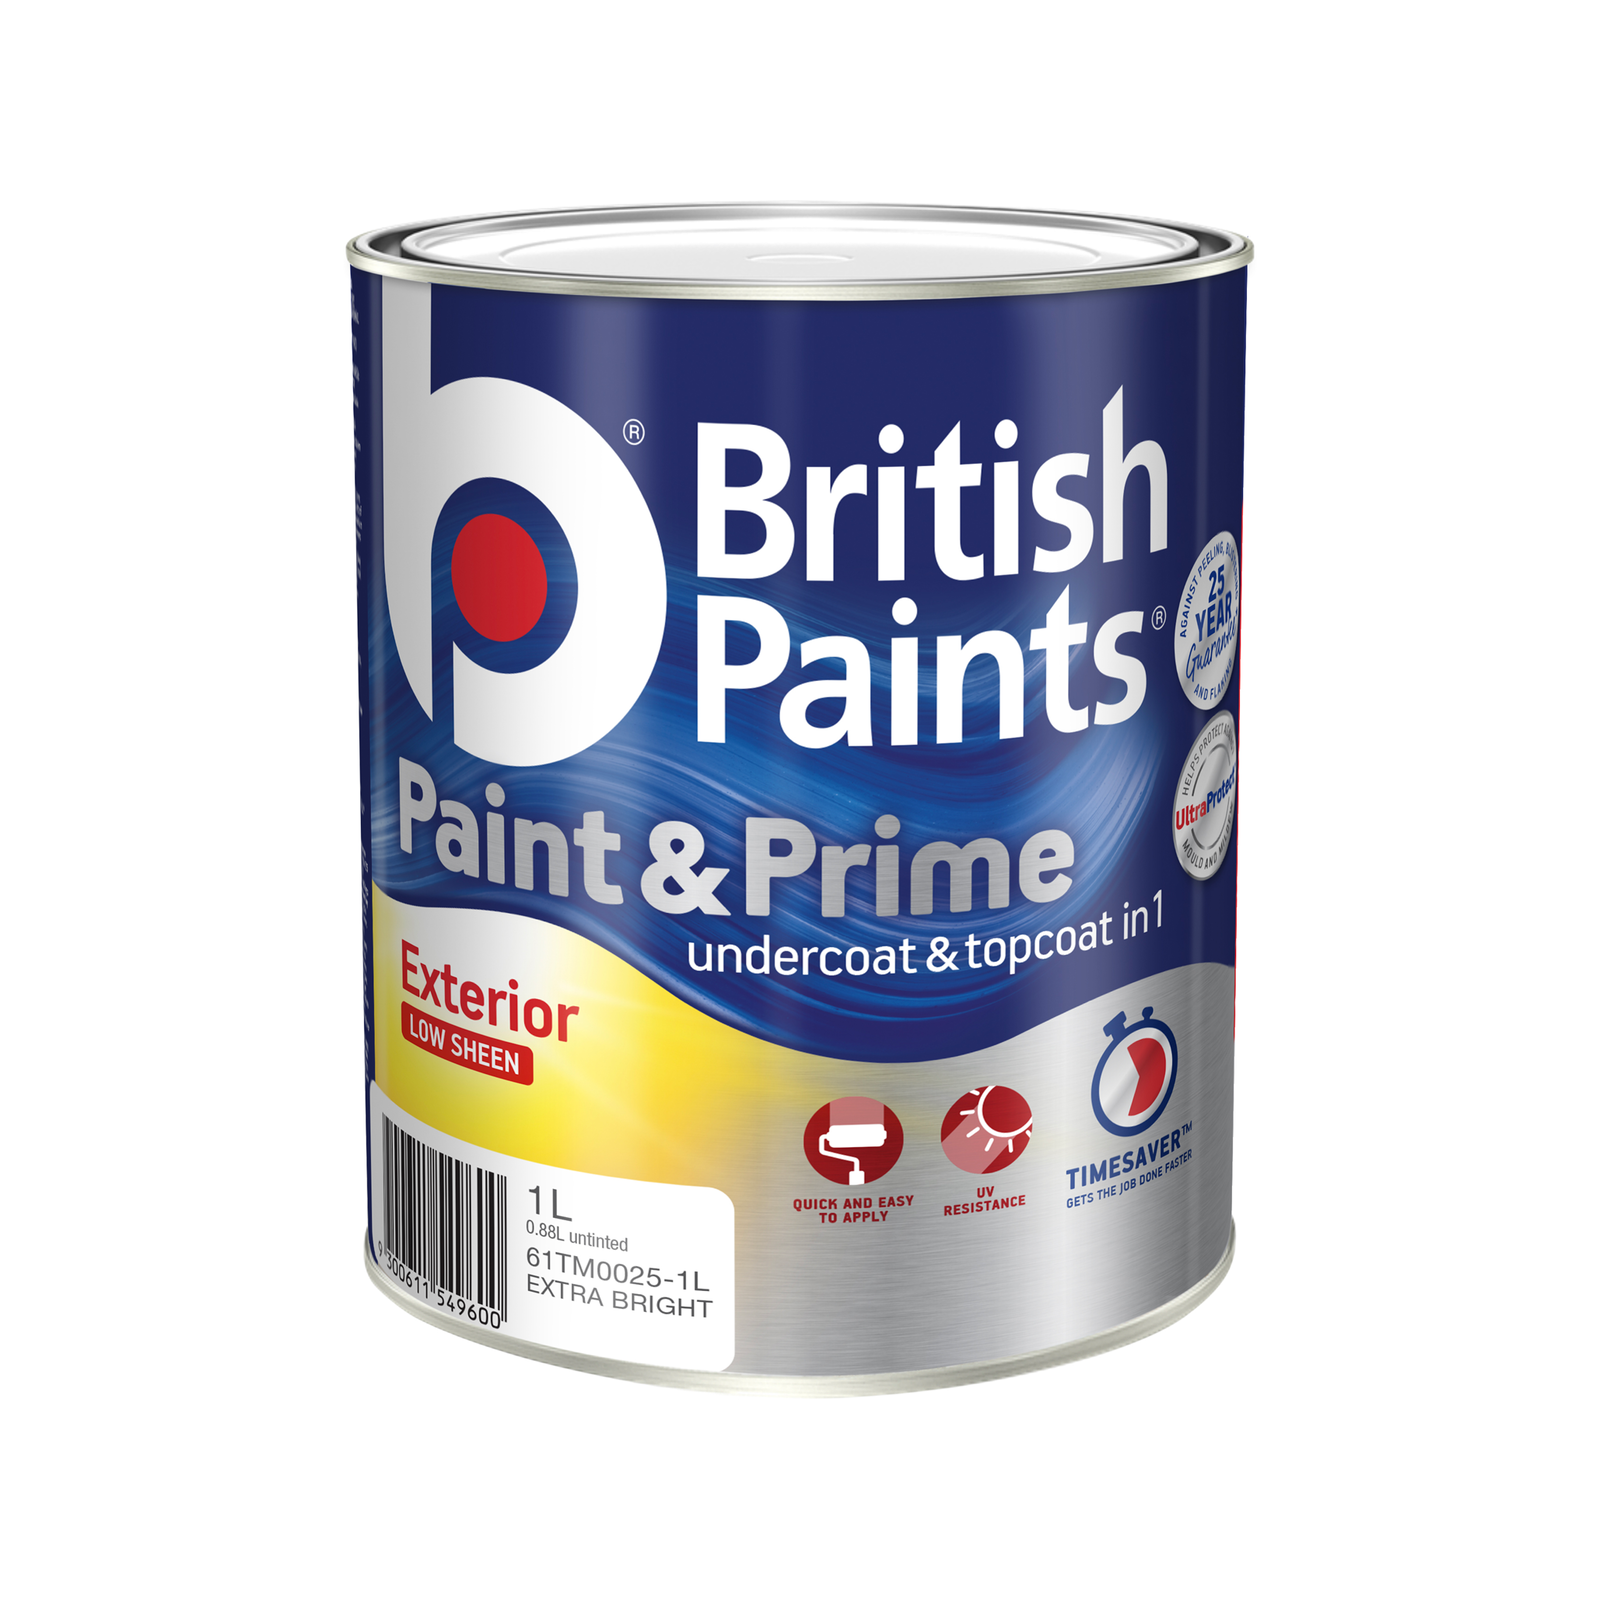 british paints logo